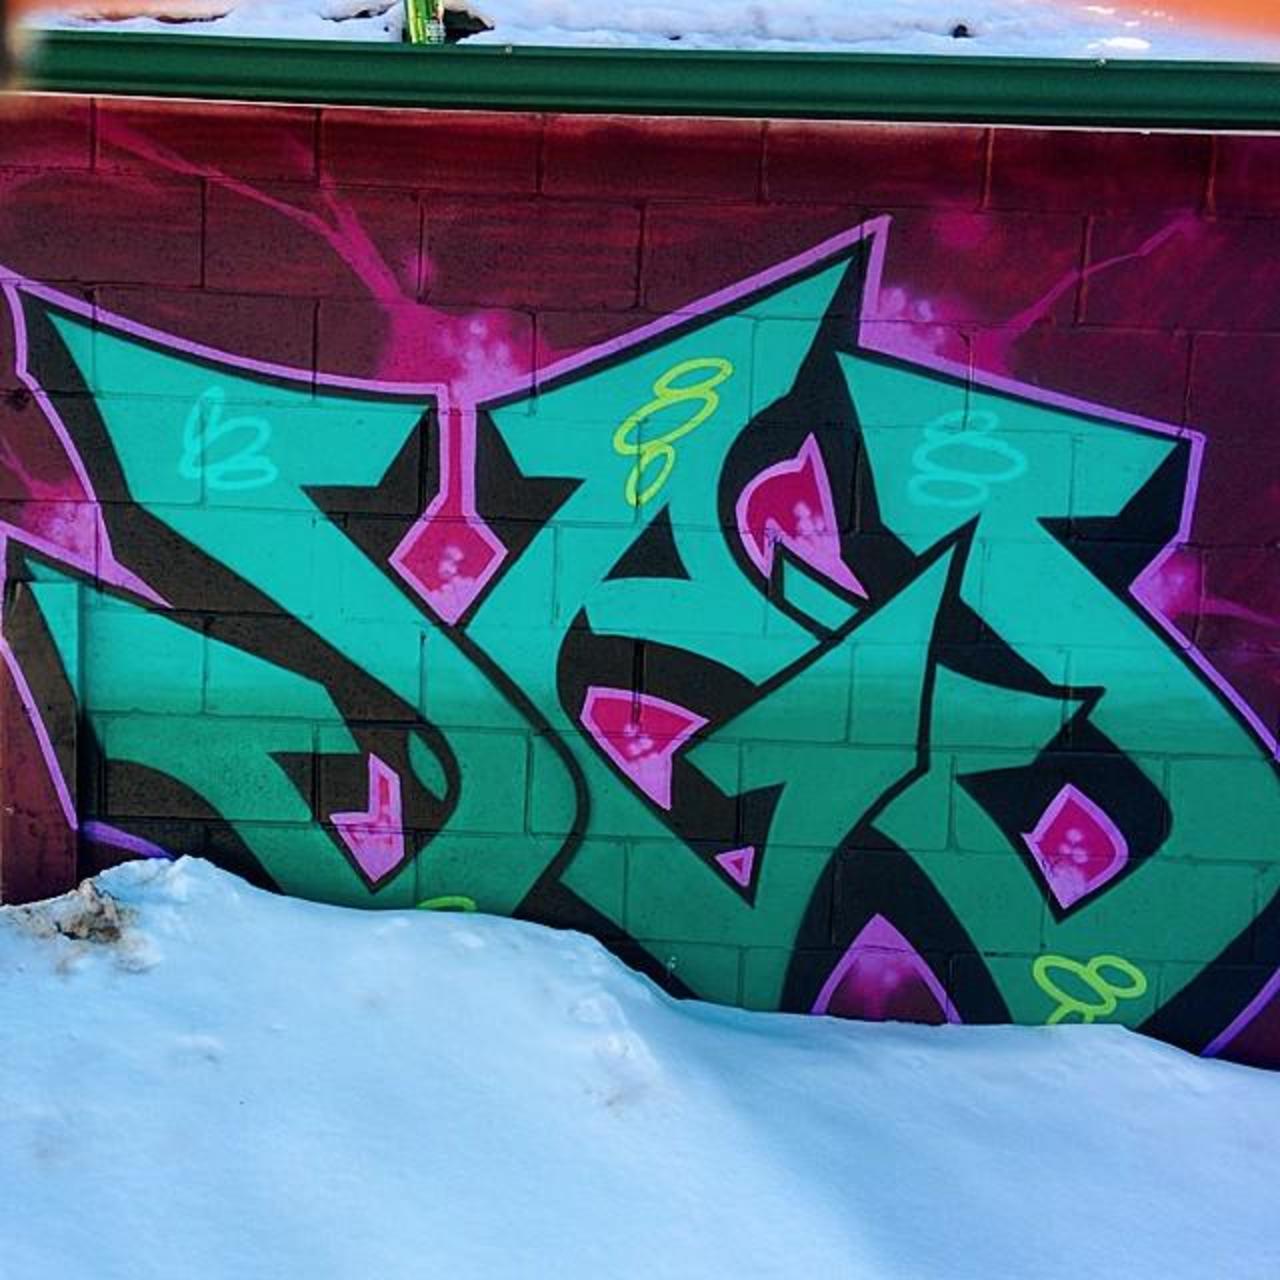 #wallnoize #graffiti #toronto #streetart #mural #urbanart #wallart #graf #torontostreetart #graffititoronto #street… http://t.co/7CwKRg3ua3